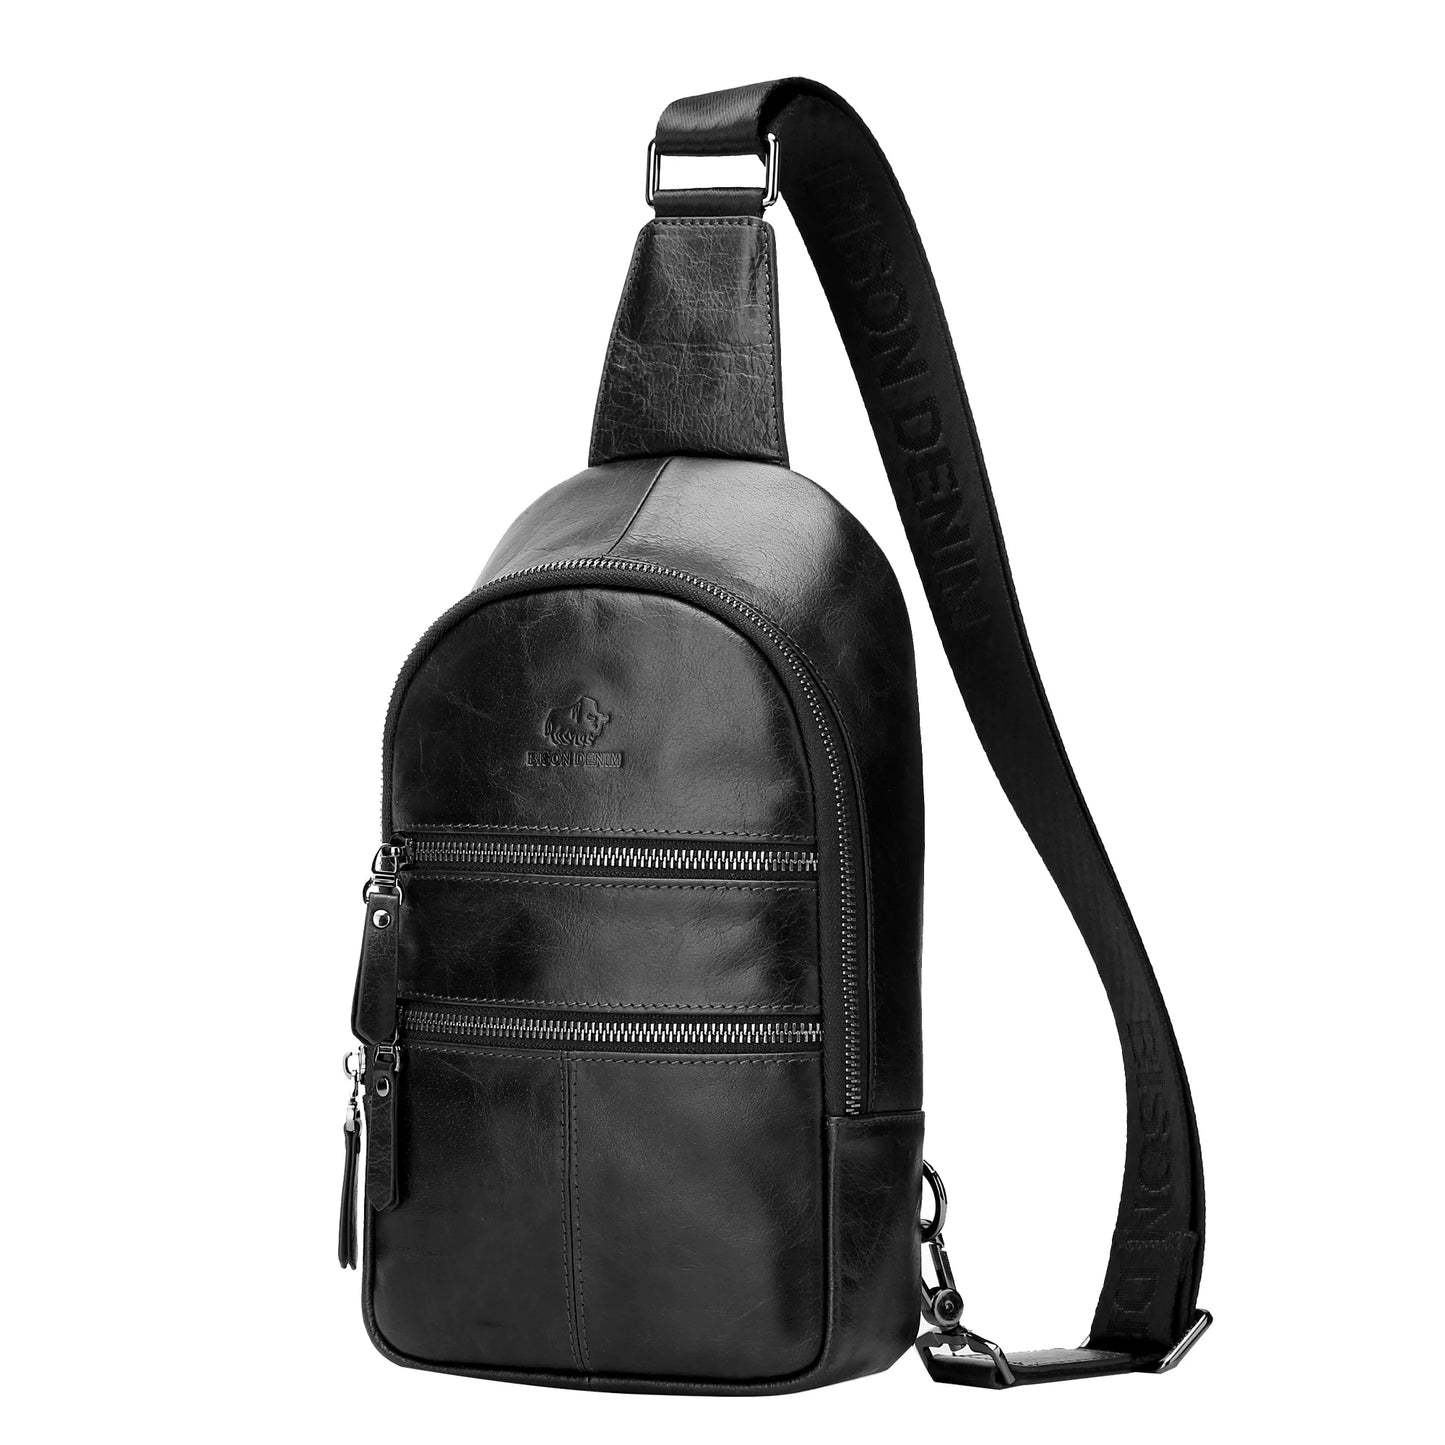 BISON DENIM Men's Genuine Leather Chest Bags Men Multifunctional Shoulder Messenger Bags Male Sling Pack Crossbody Bag W2445 black-small